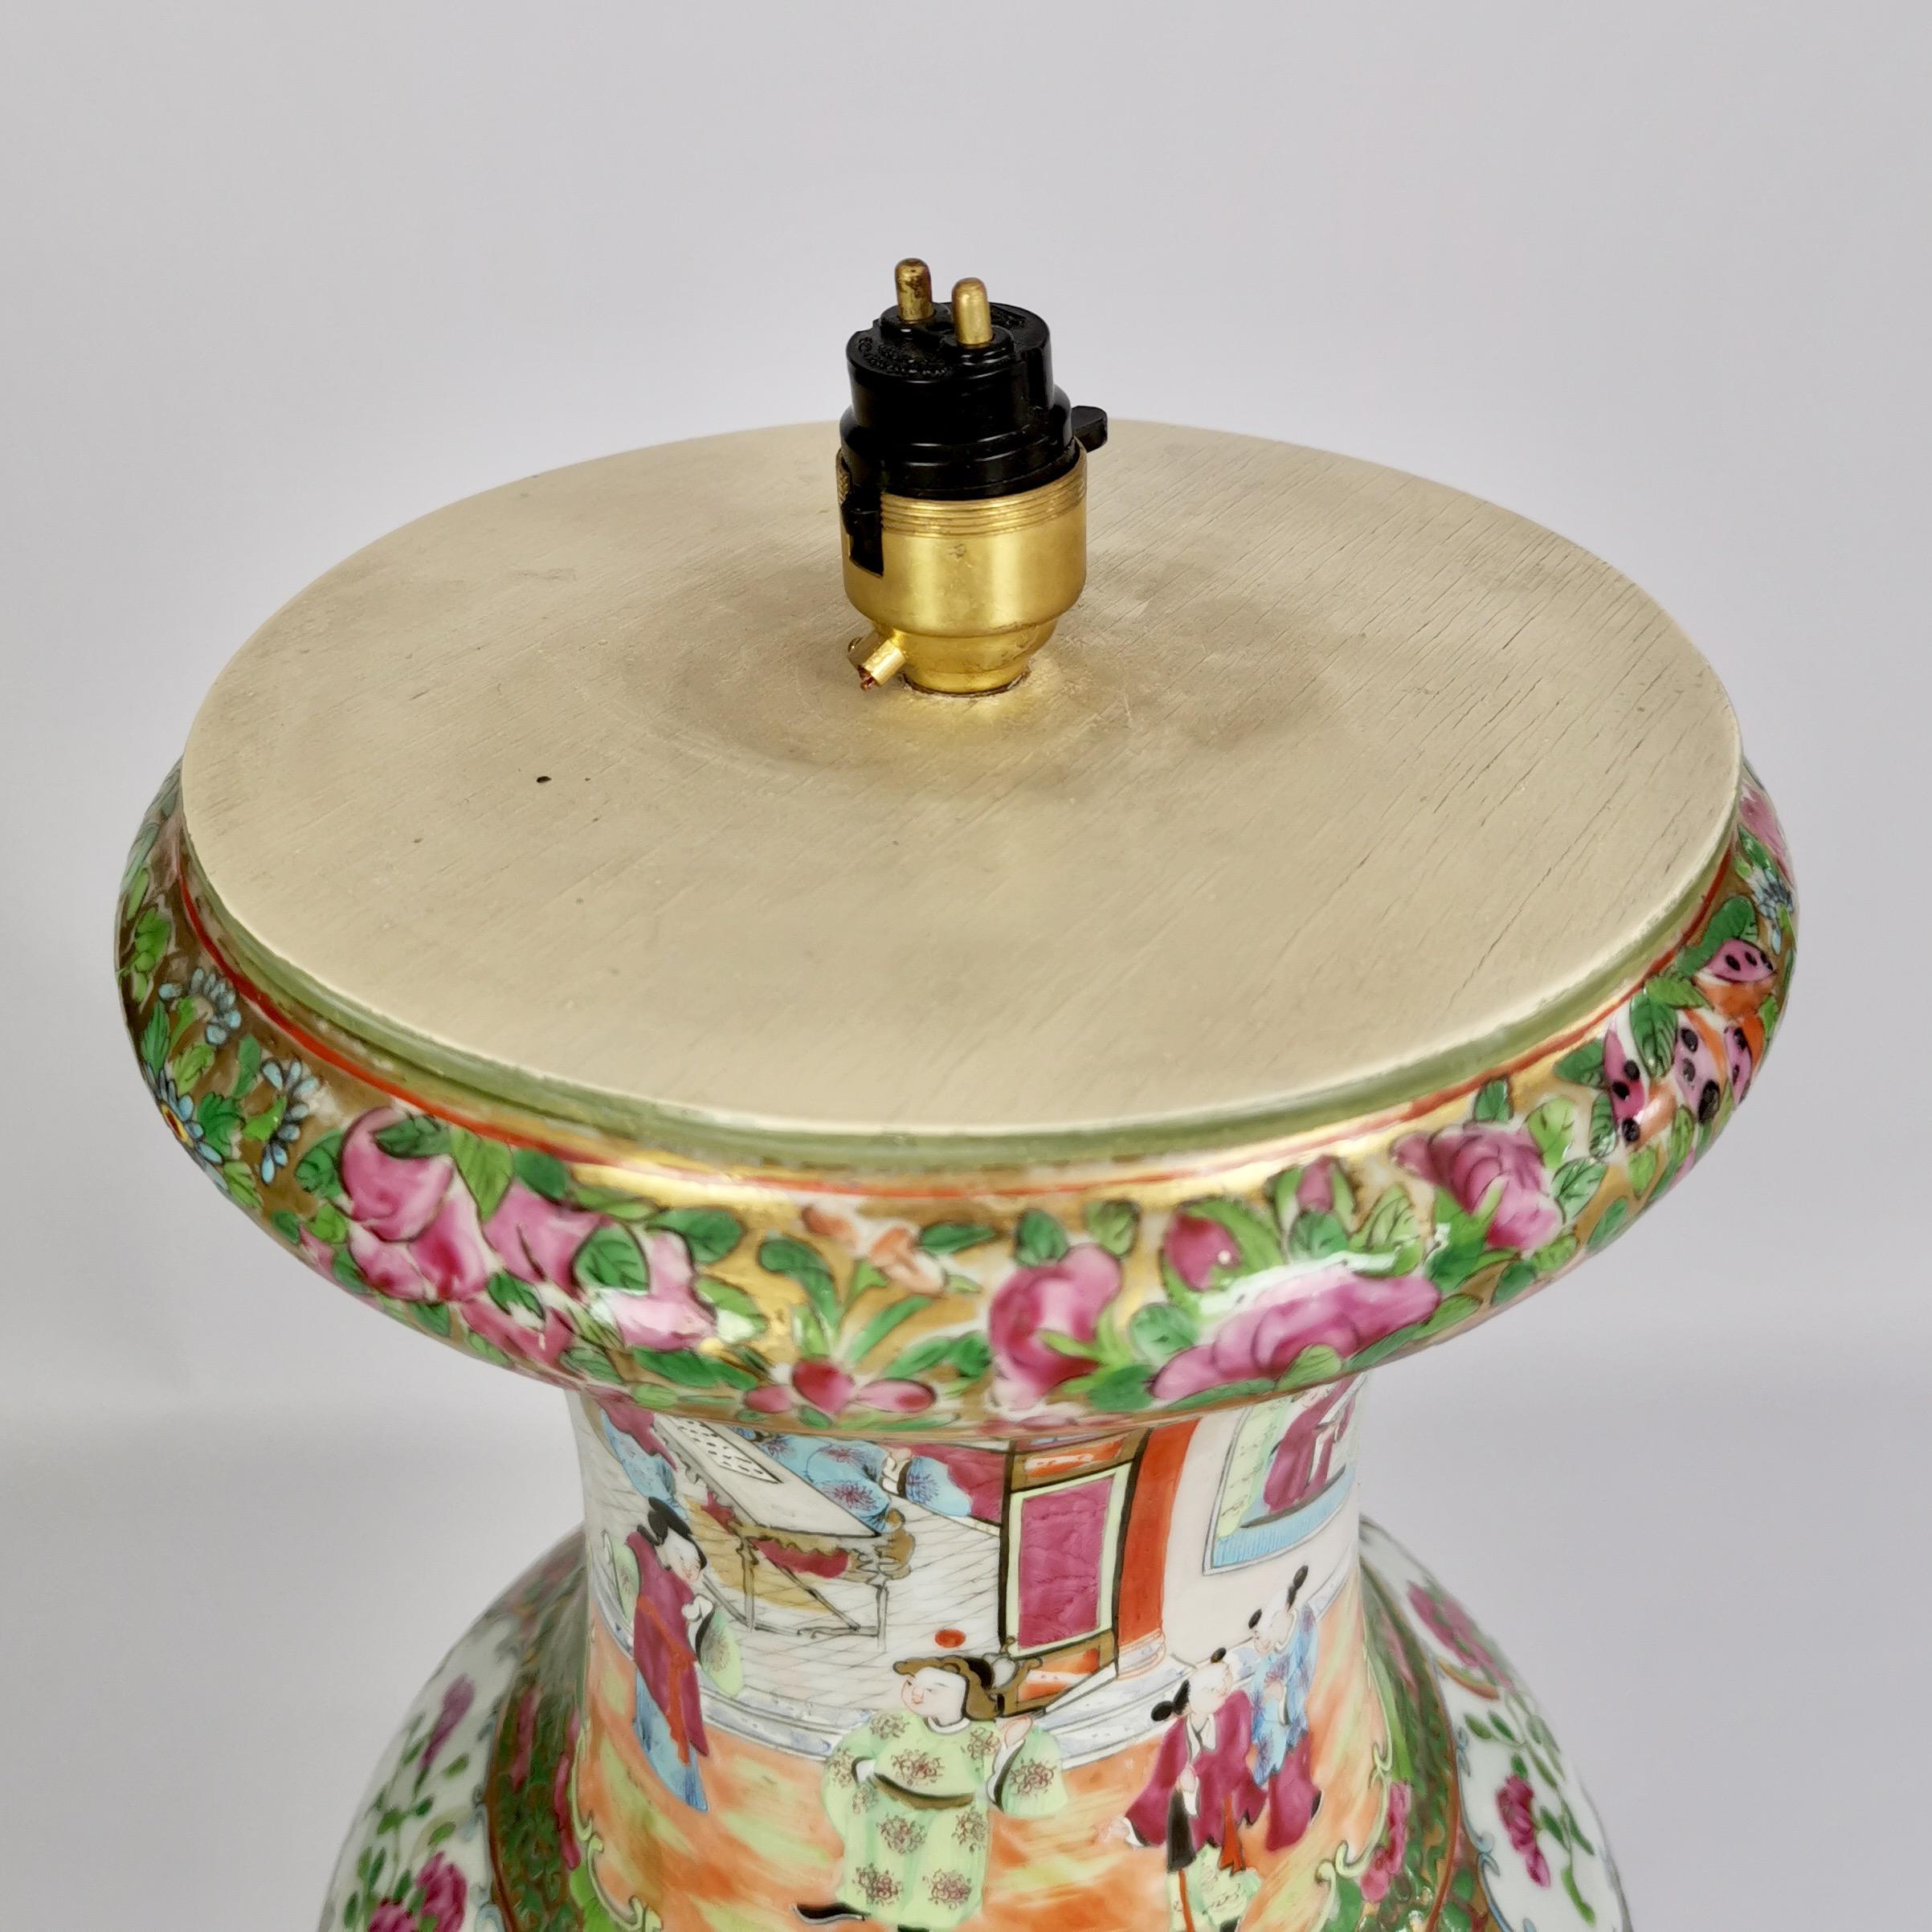 Huge Chinese Canton Porcelain Lamp Base, Family Scenes, Birds, Flowers, 1830-60 11